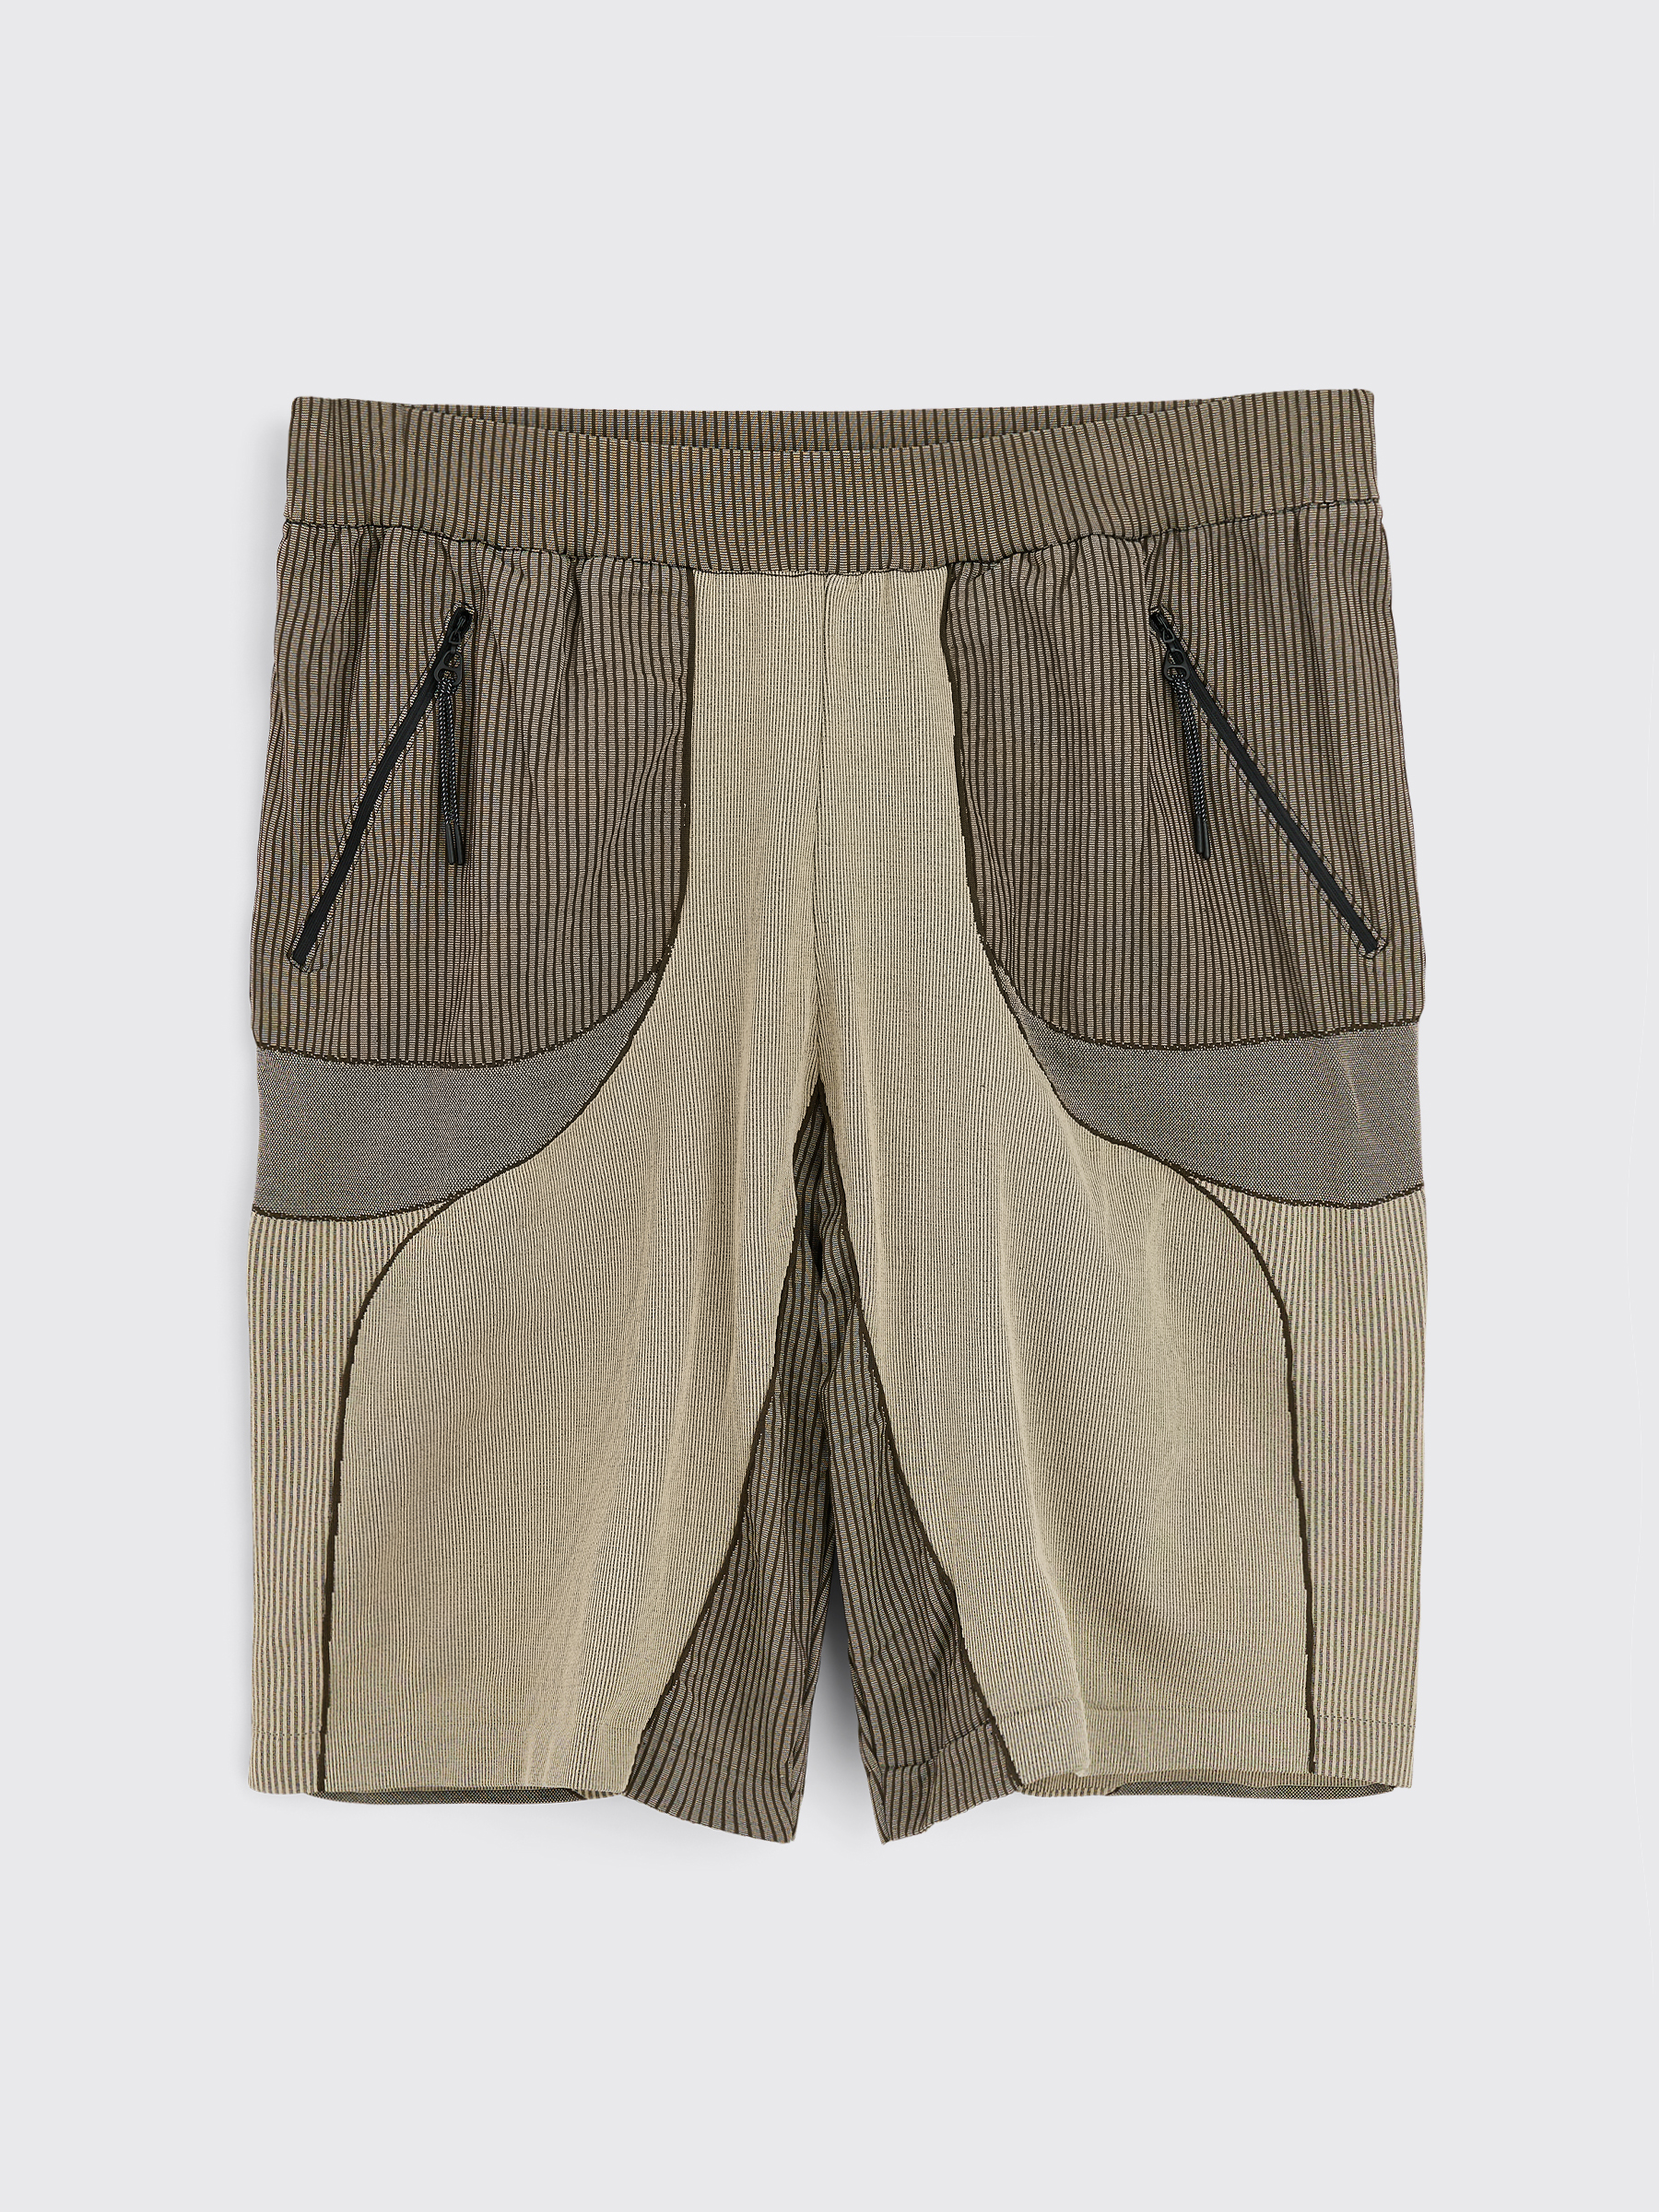 Très Bien - _J.L-A.L_ Gelder Knitted Short Sabbia Marrone | Shorts